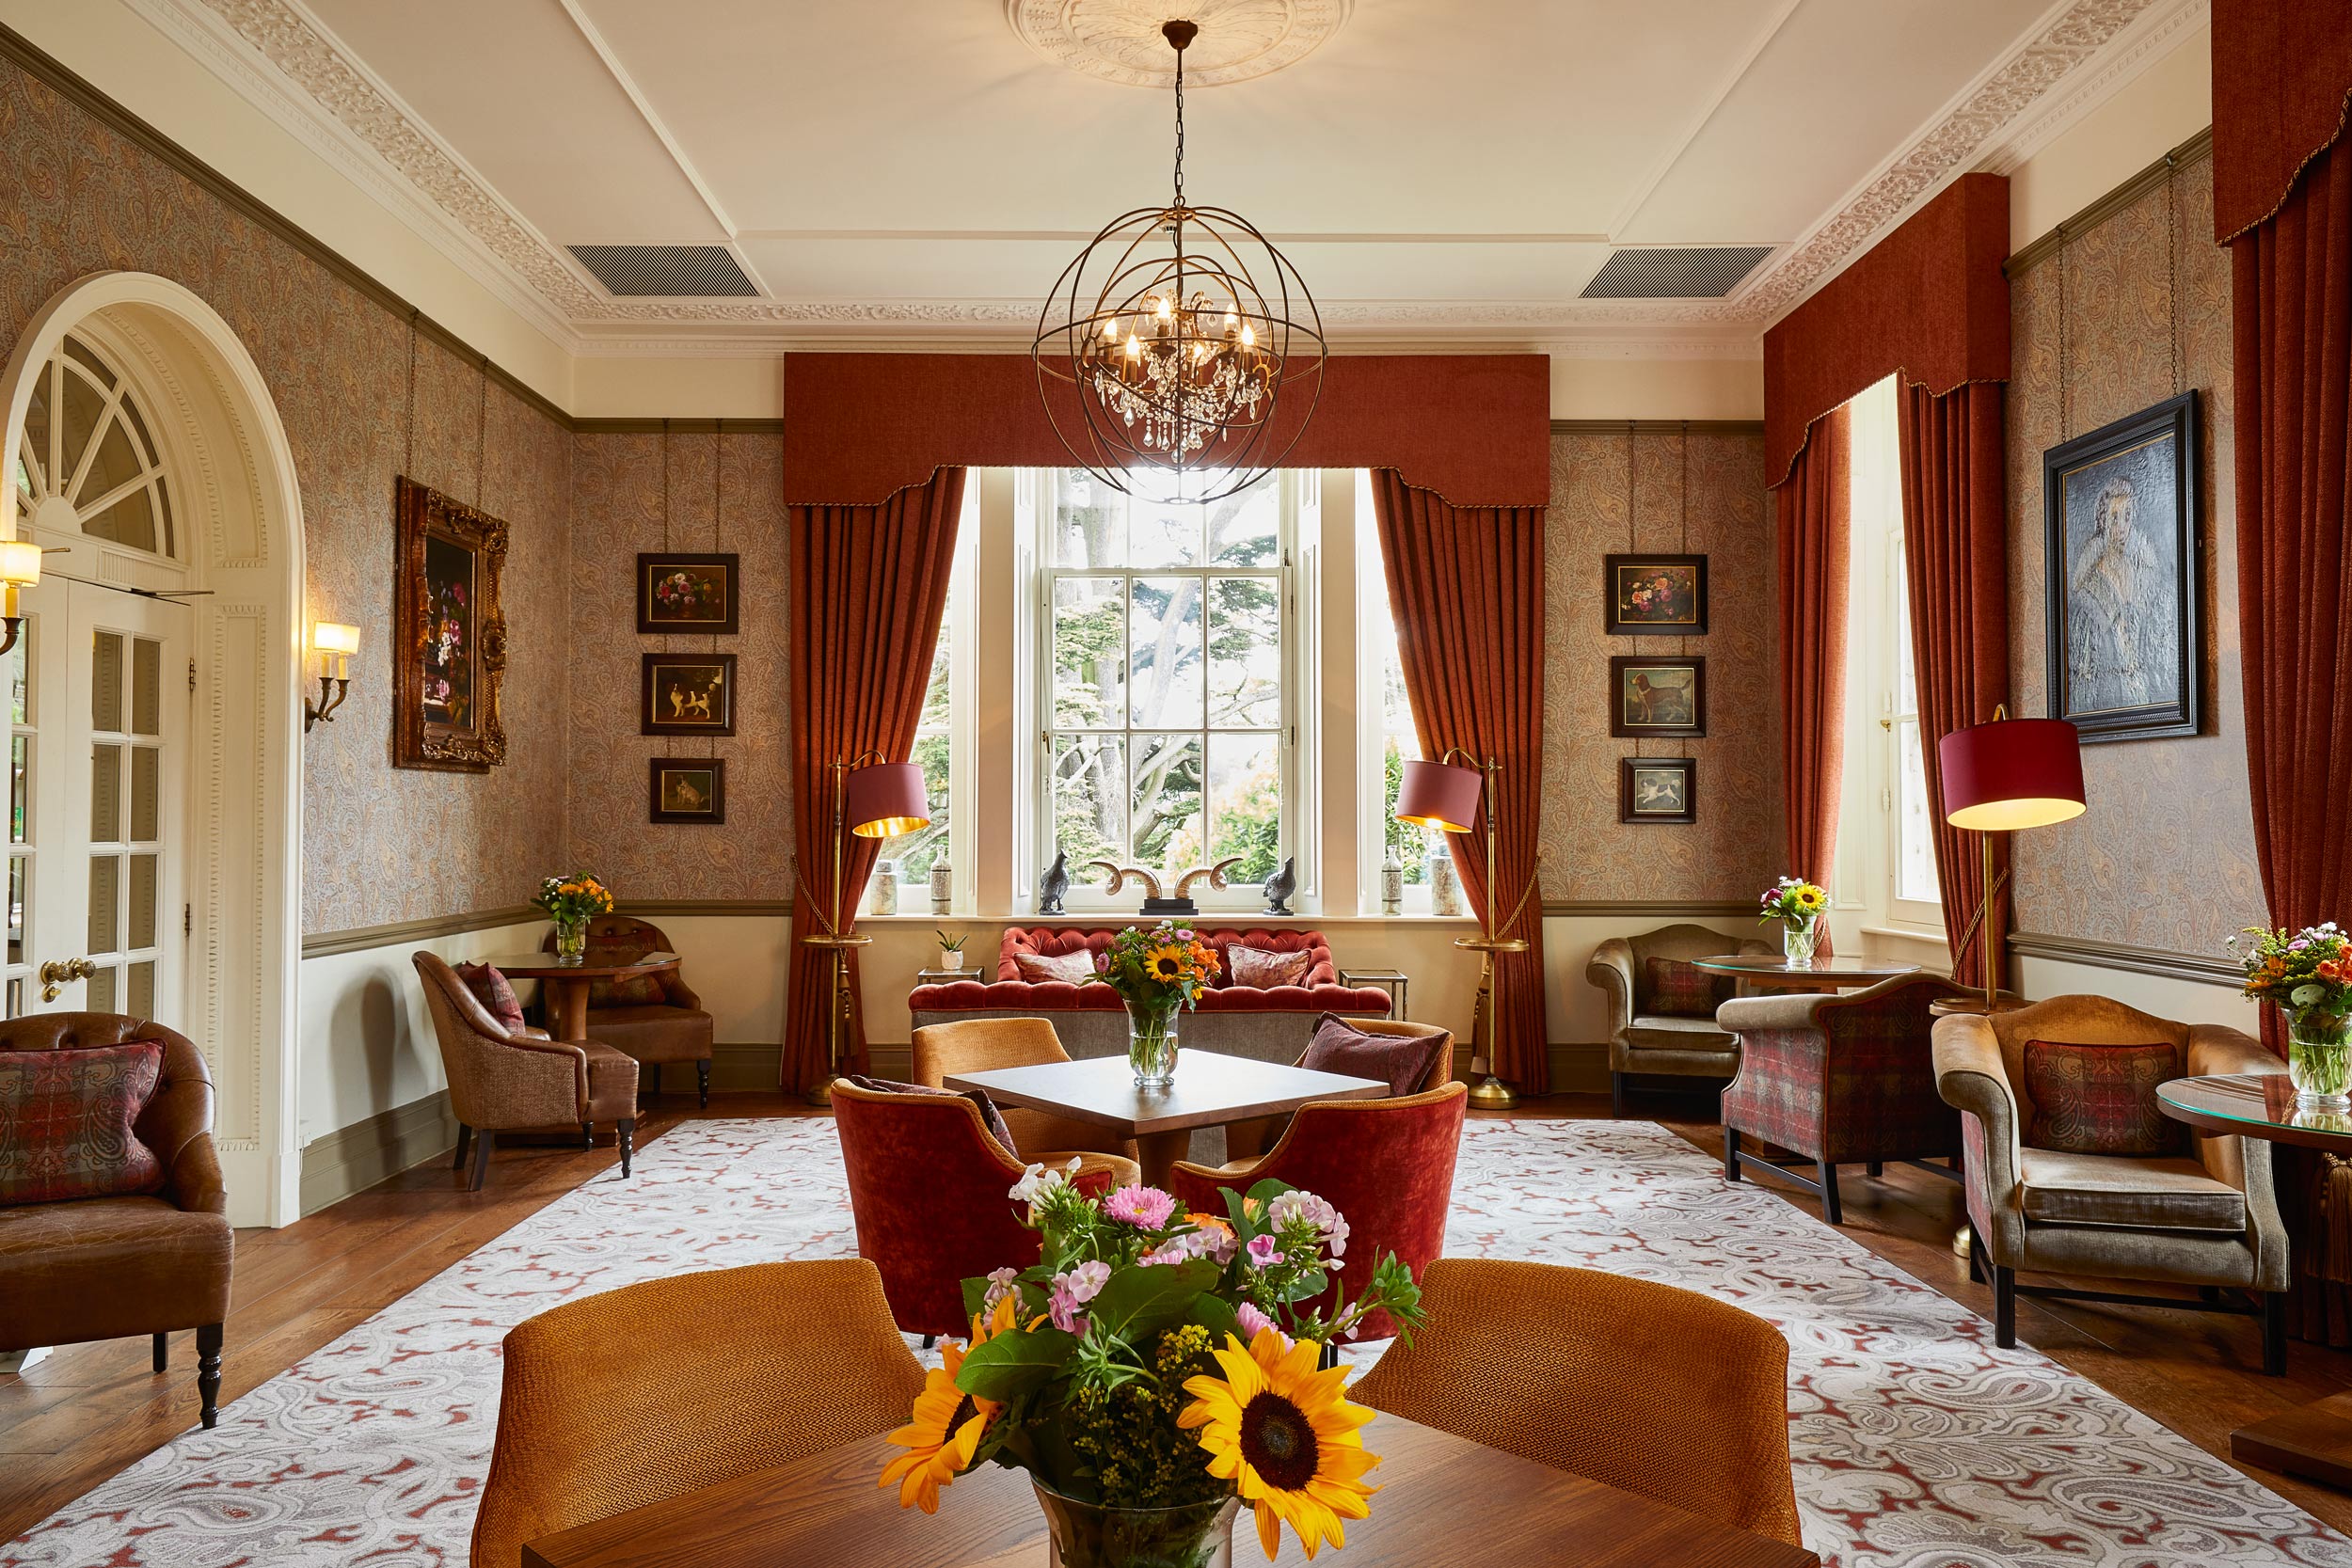 Interior Lounge of Bath Spa Hotel. Alastair Ferrier, Edinburgh based travel & hospitality photographer.